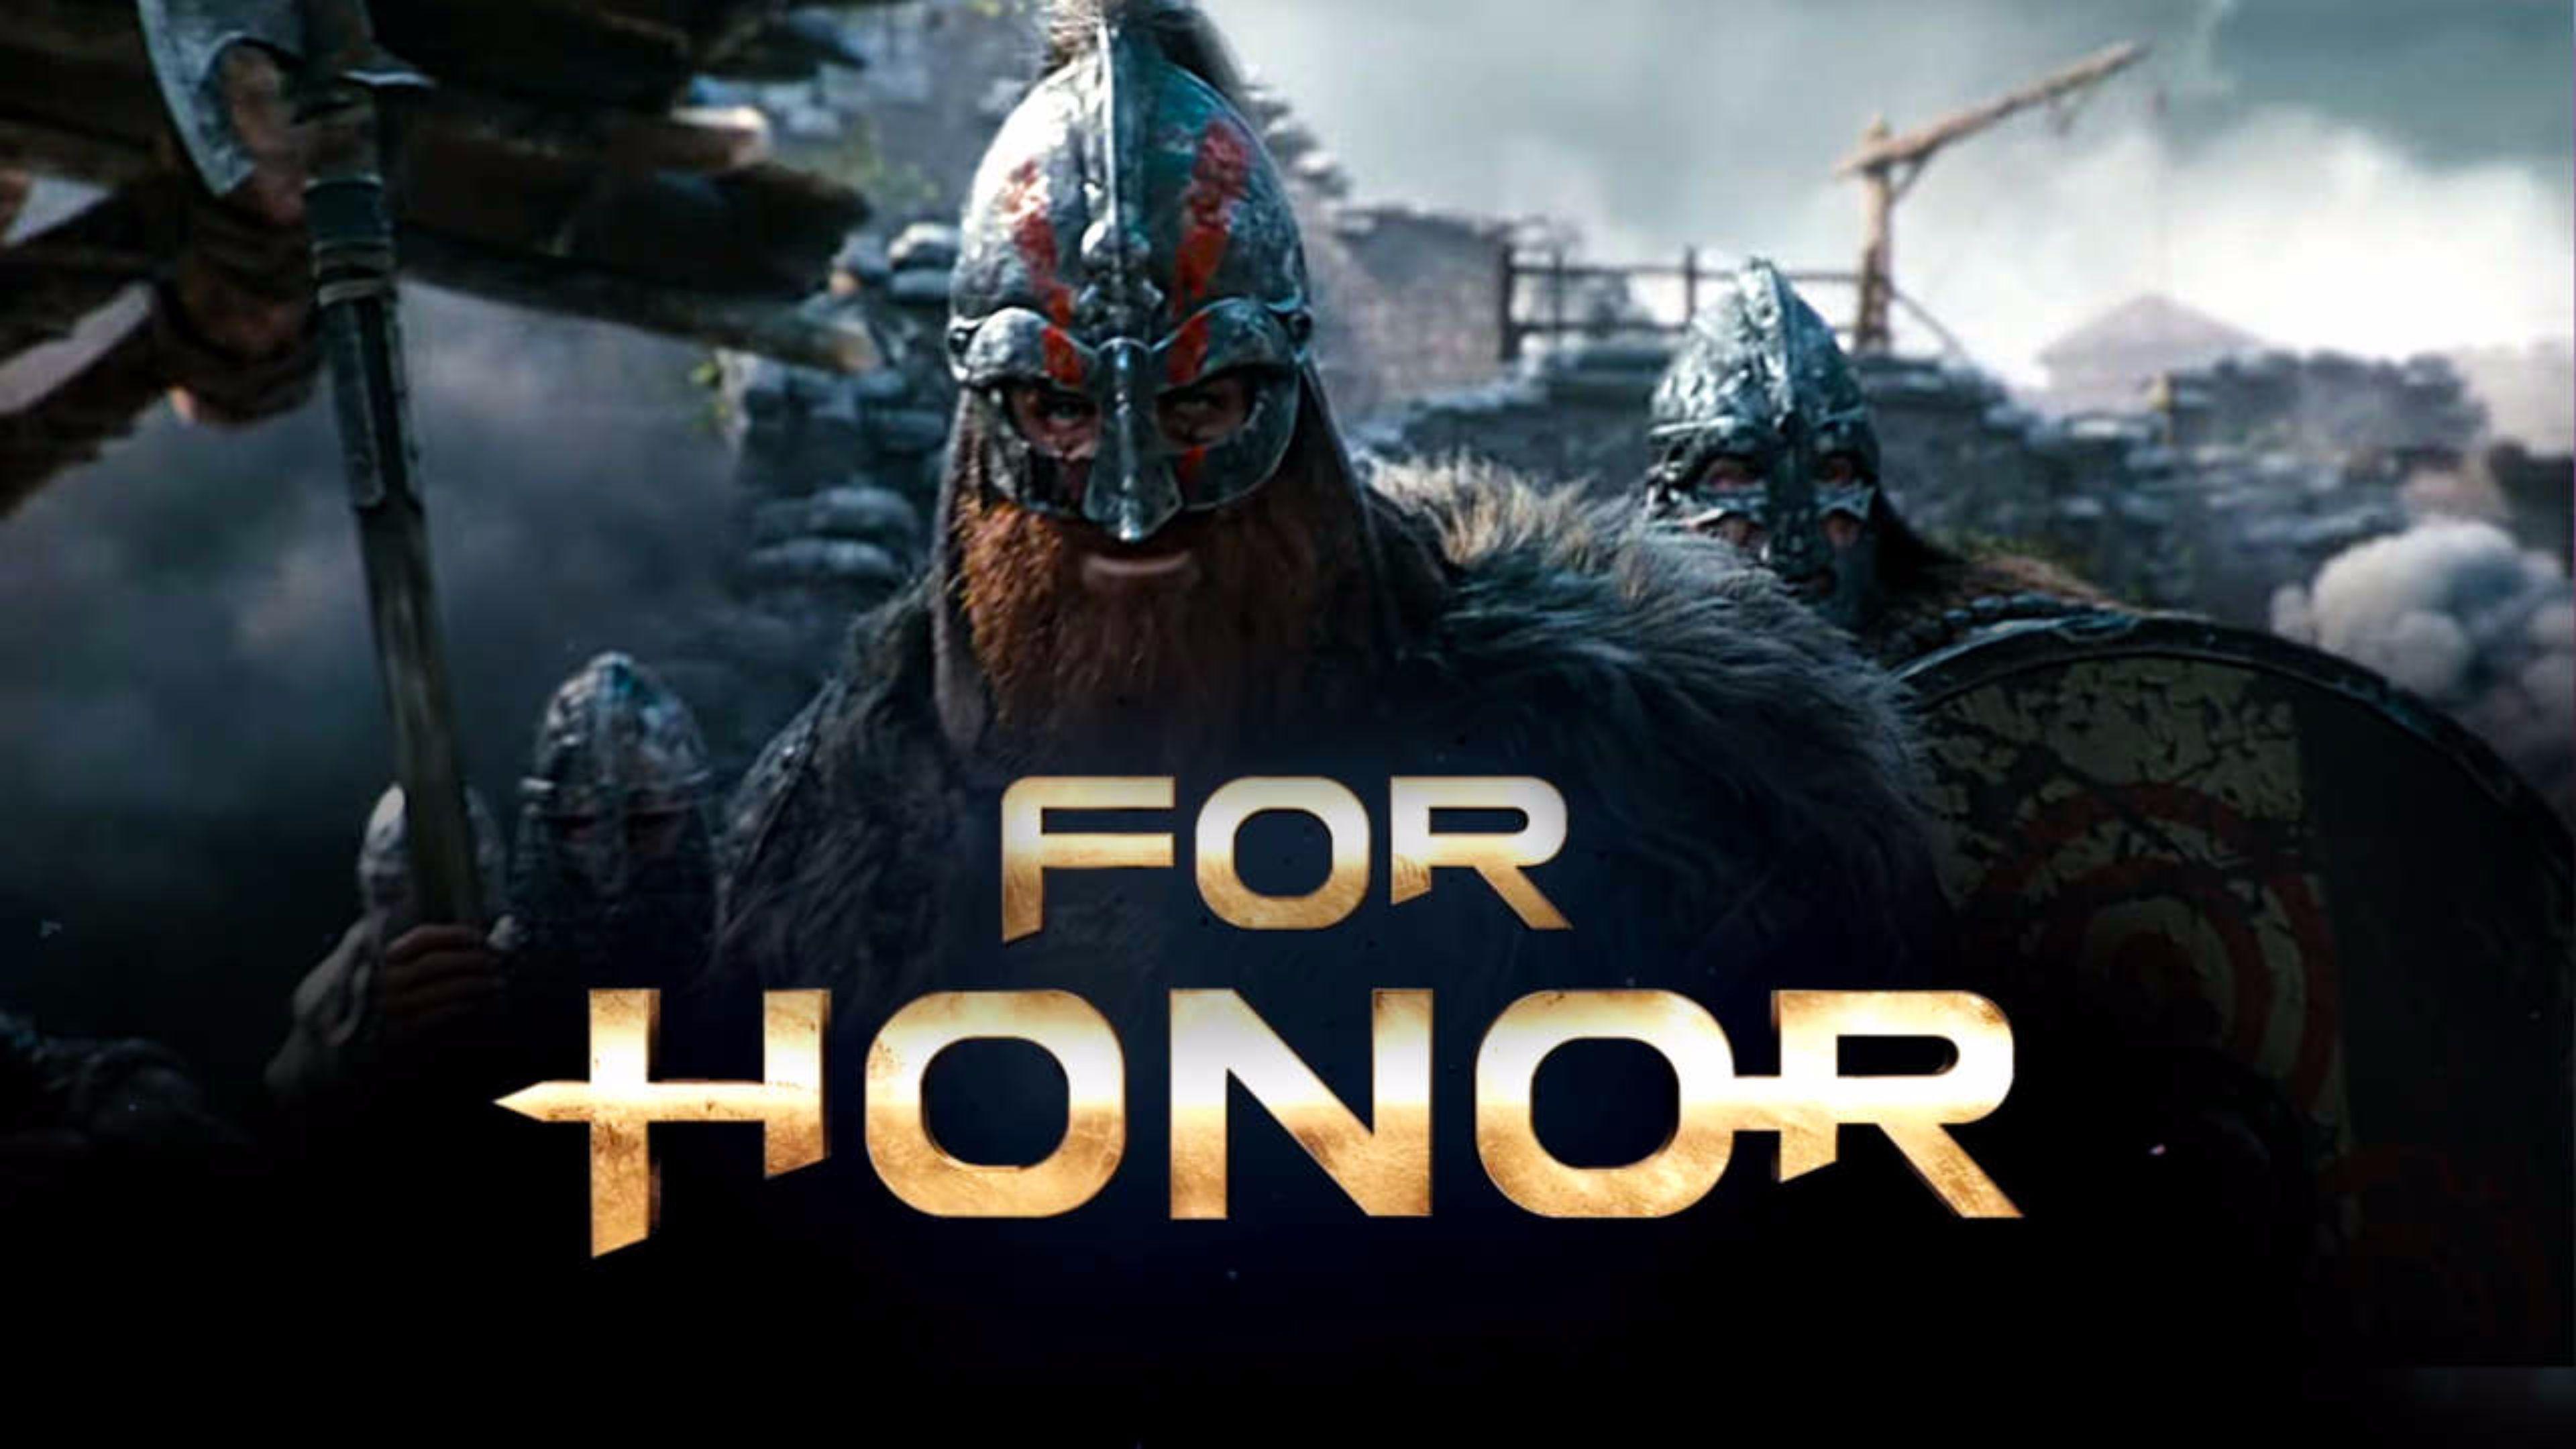 Download For Honor Wallpaper Full HD